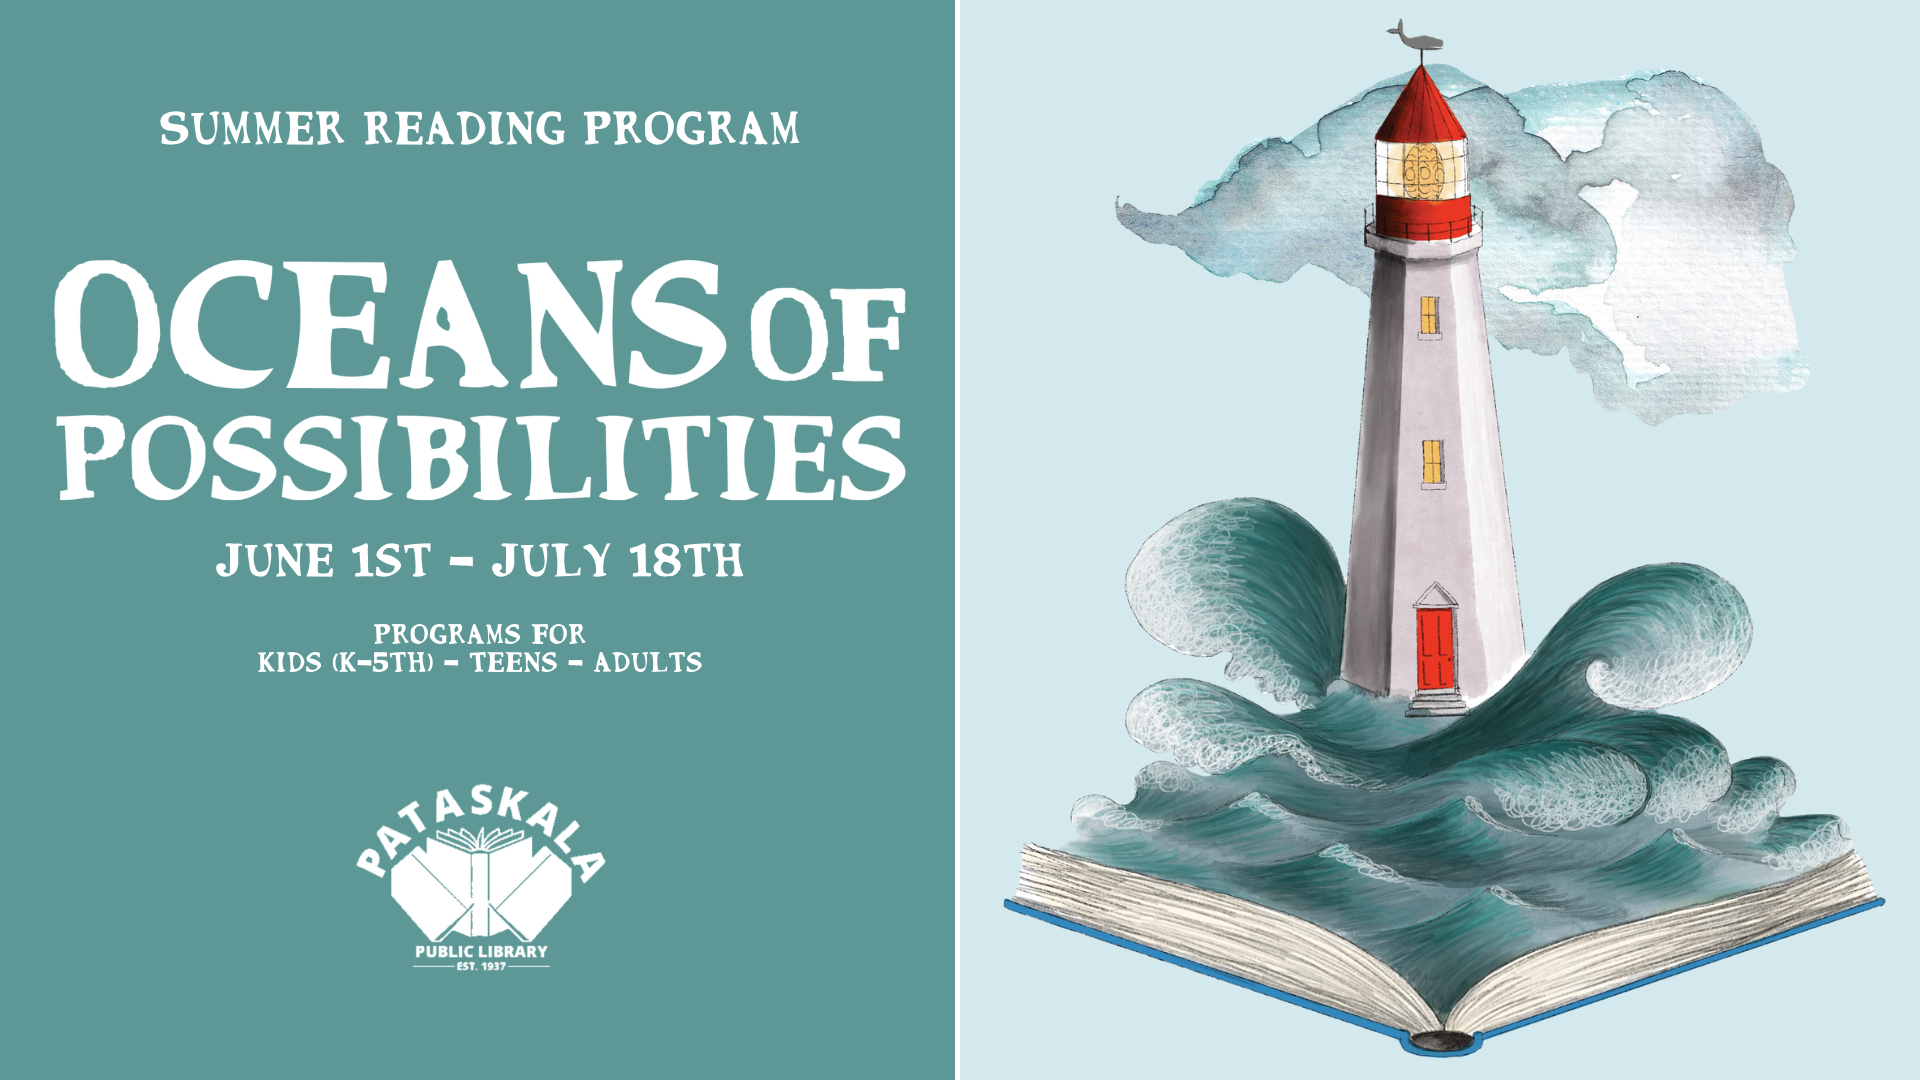 Summer Reading Program June 1st - July 18th